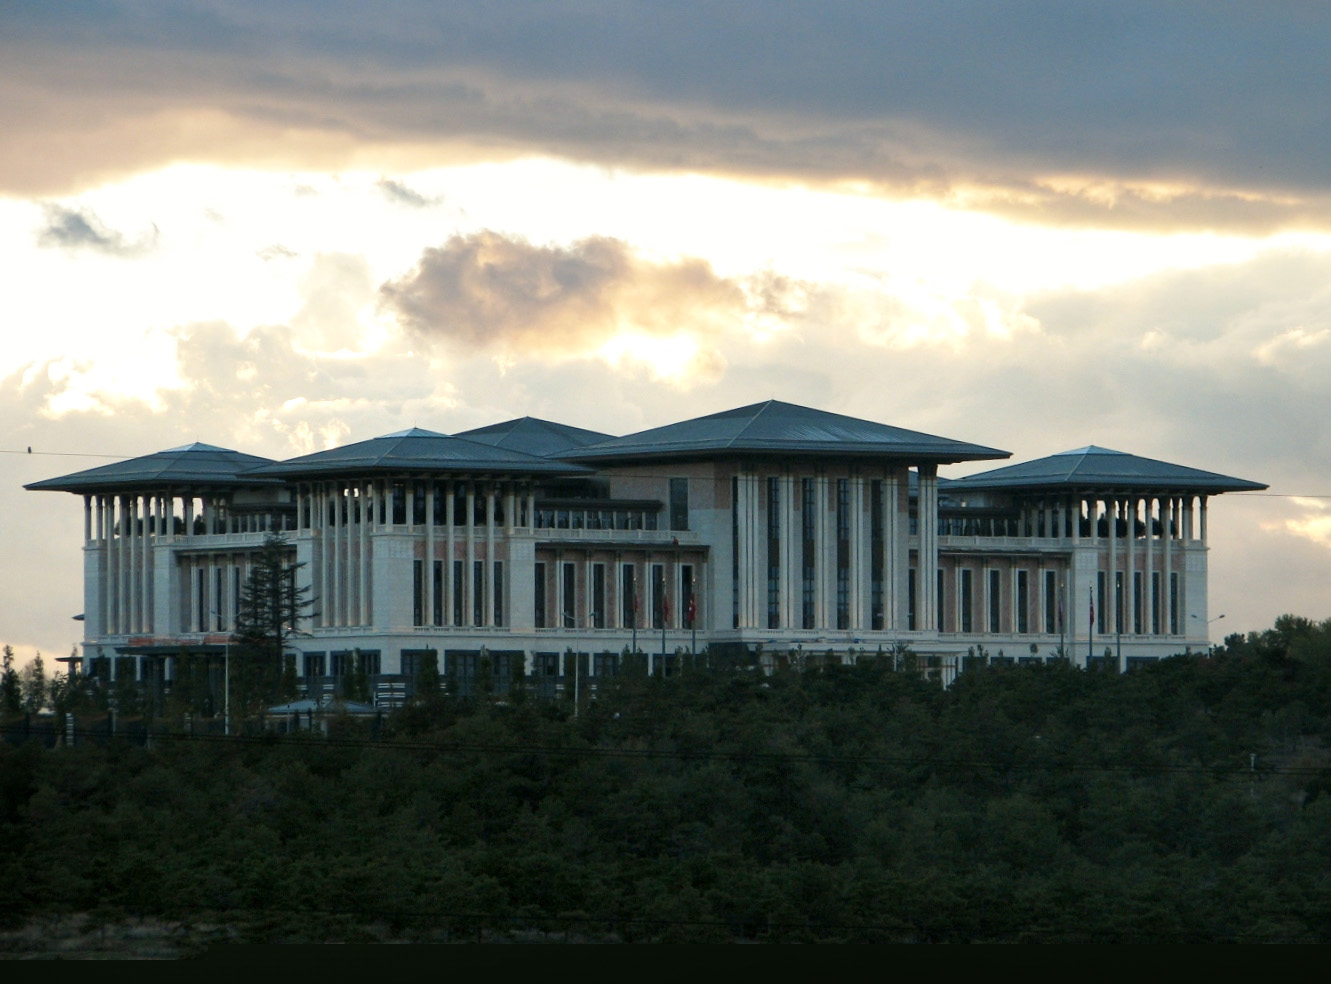 Ak_Saray_-_Presidential_Palace_Ankara_2014_002.jpg